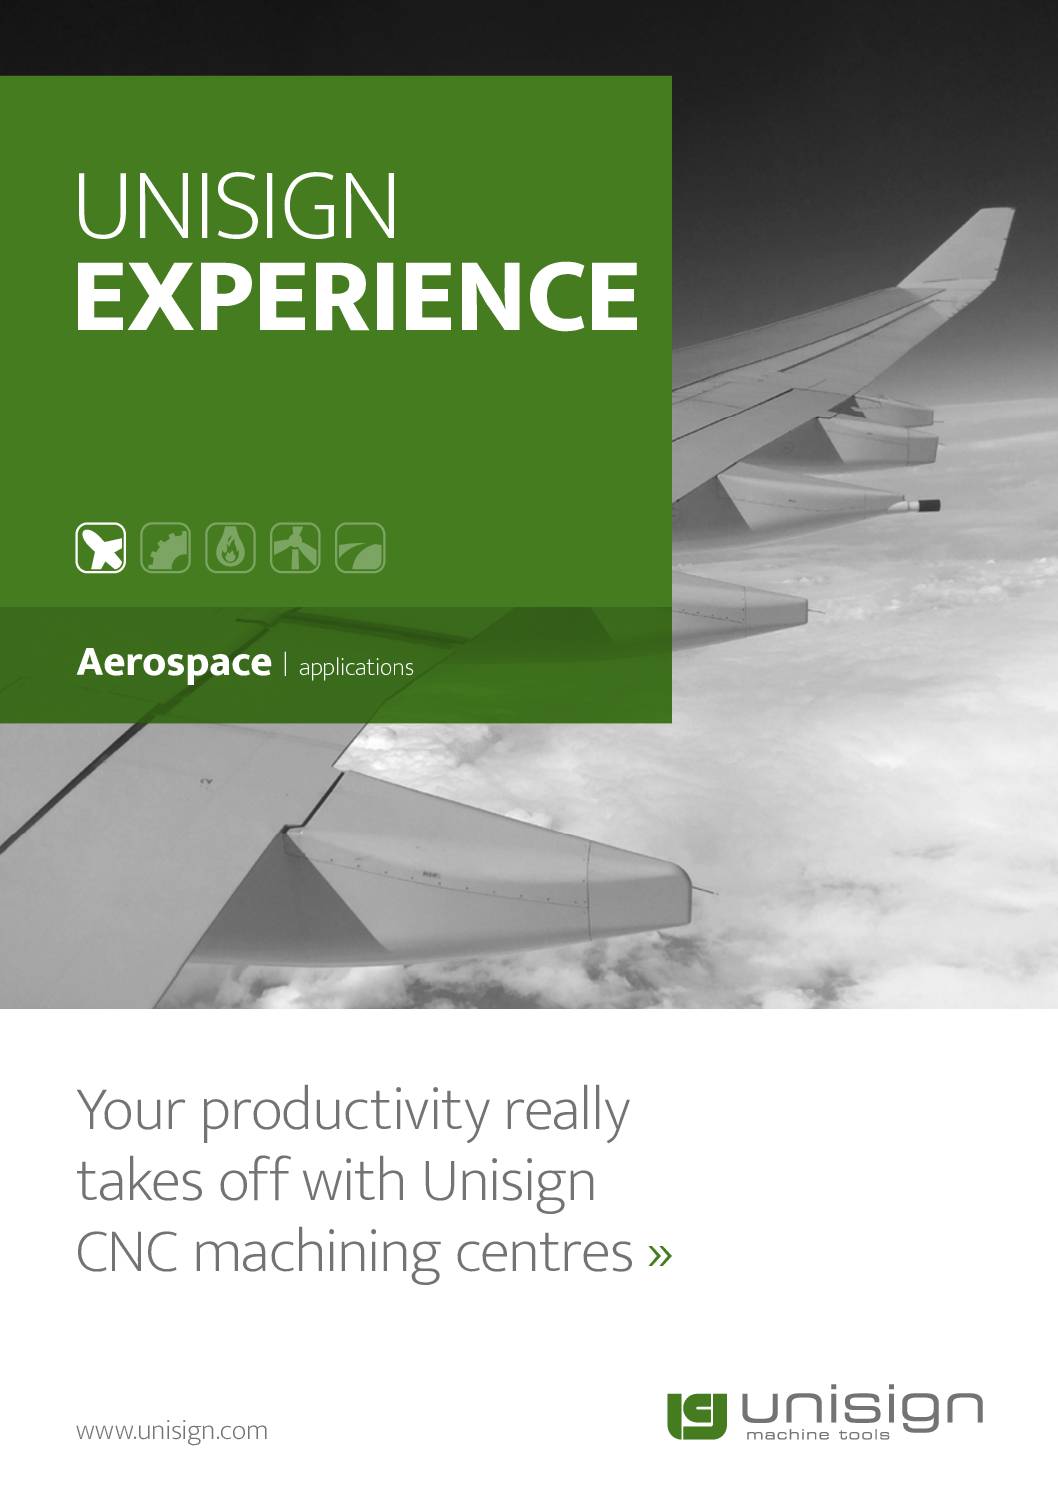 Experience_Aerospace_Applications-EN